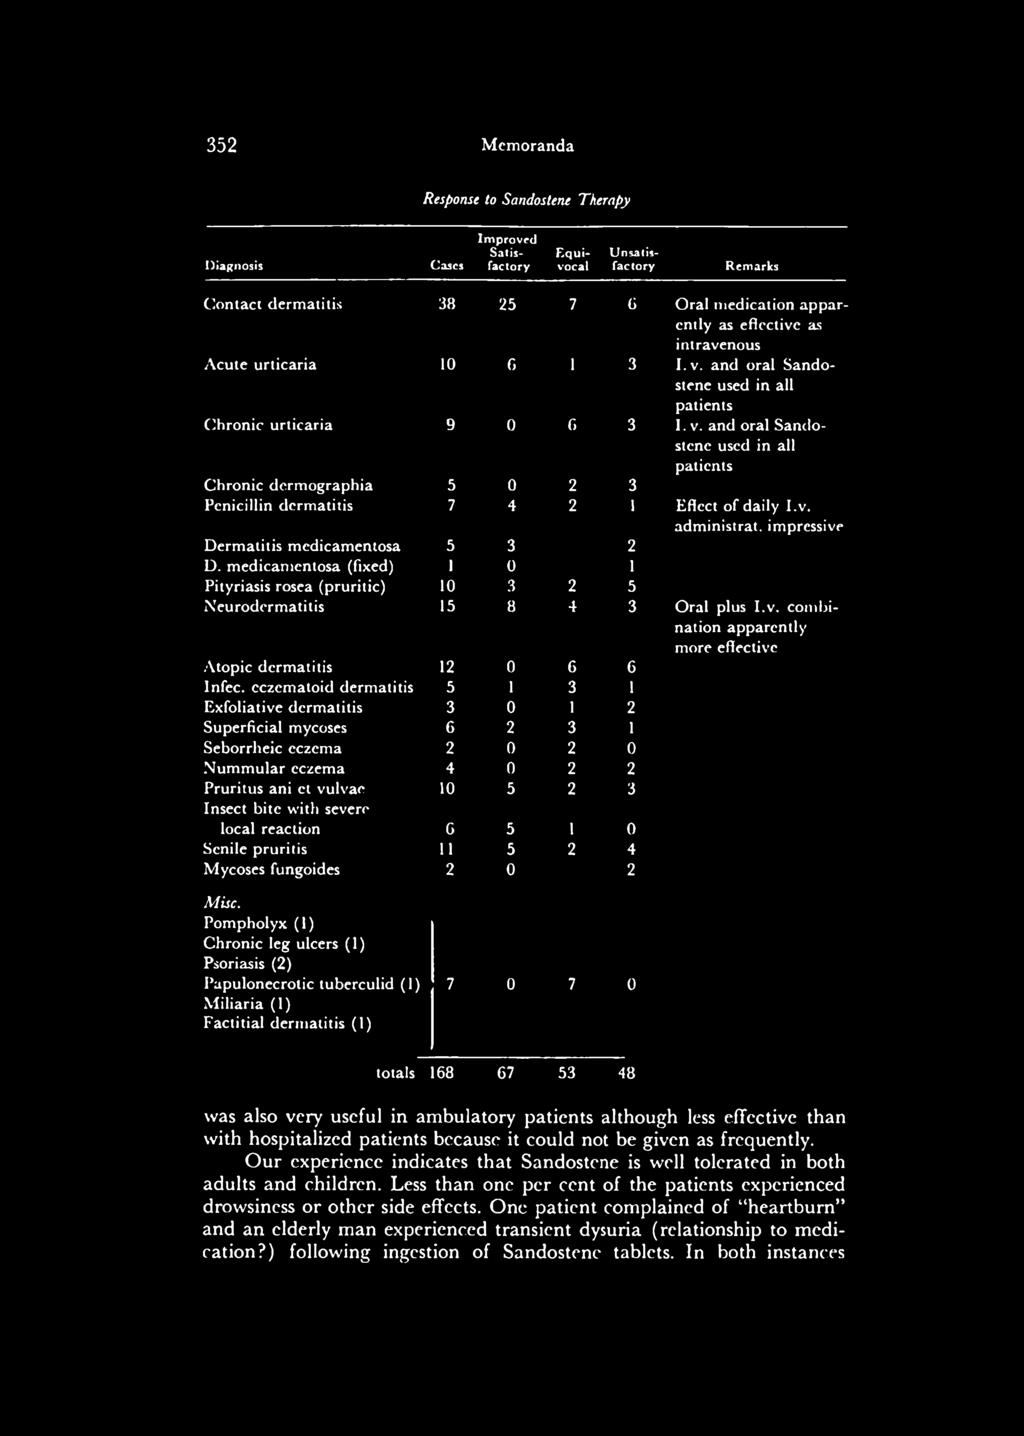 and oral Sandostene used in all patients Chronic dermographia 5 0 3 Penicillin dermatitis 7 4 2 1 Effect of daily I.v. administrât, impressive Dermatitis medicamentosa 5 3 2 D.